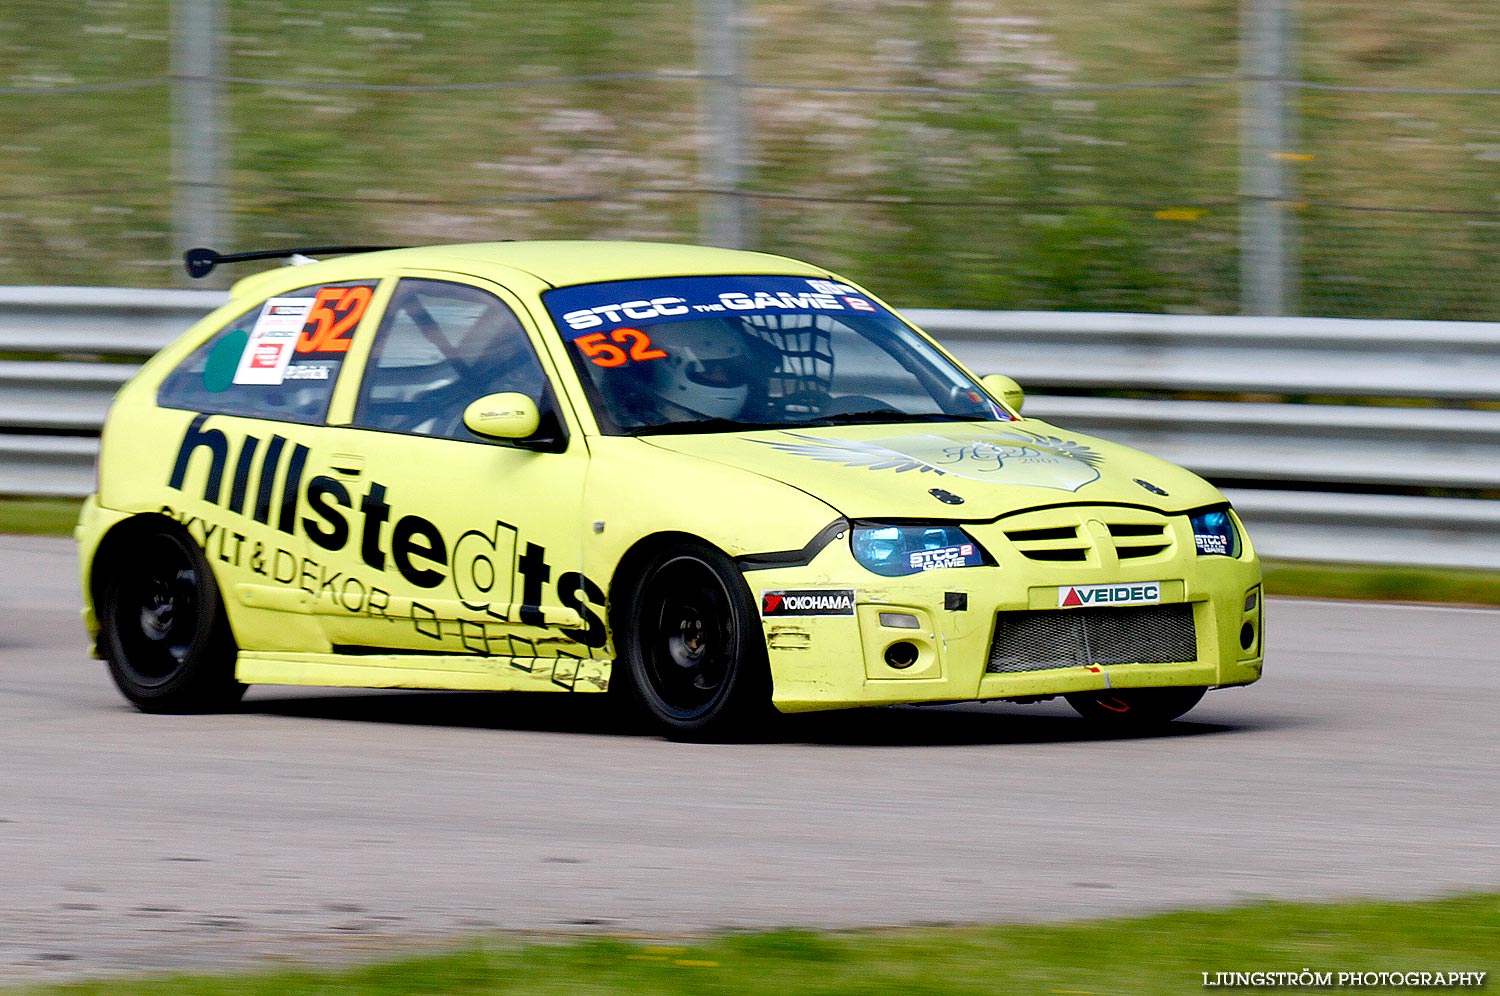 SSK Raceweek,mix,Kinnekulle Ring,Götene,Sverige,Motorsport,,2011,44476